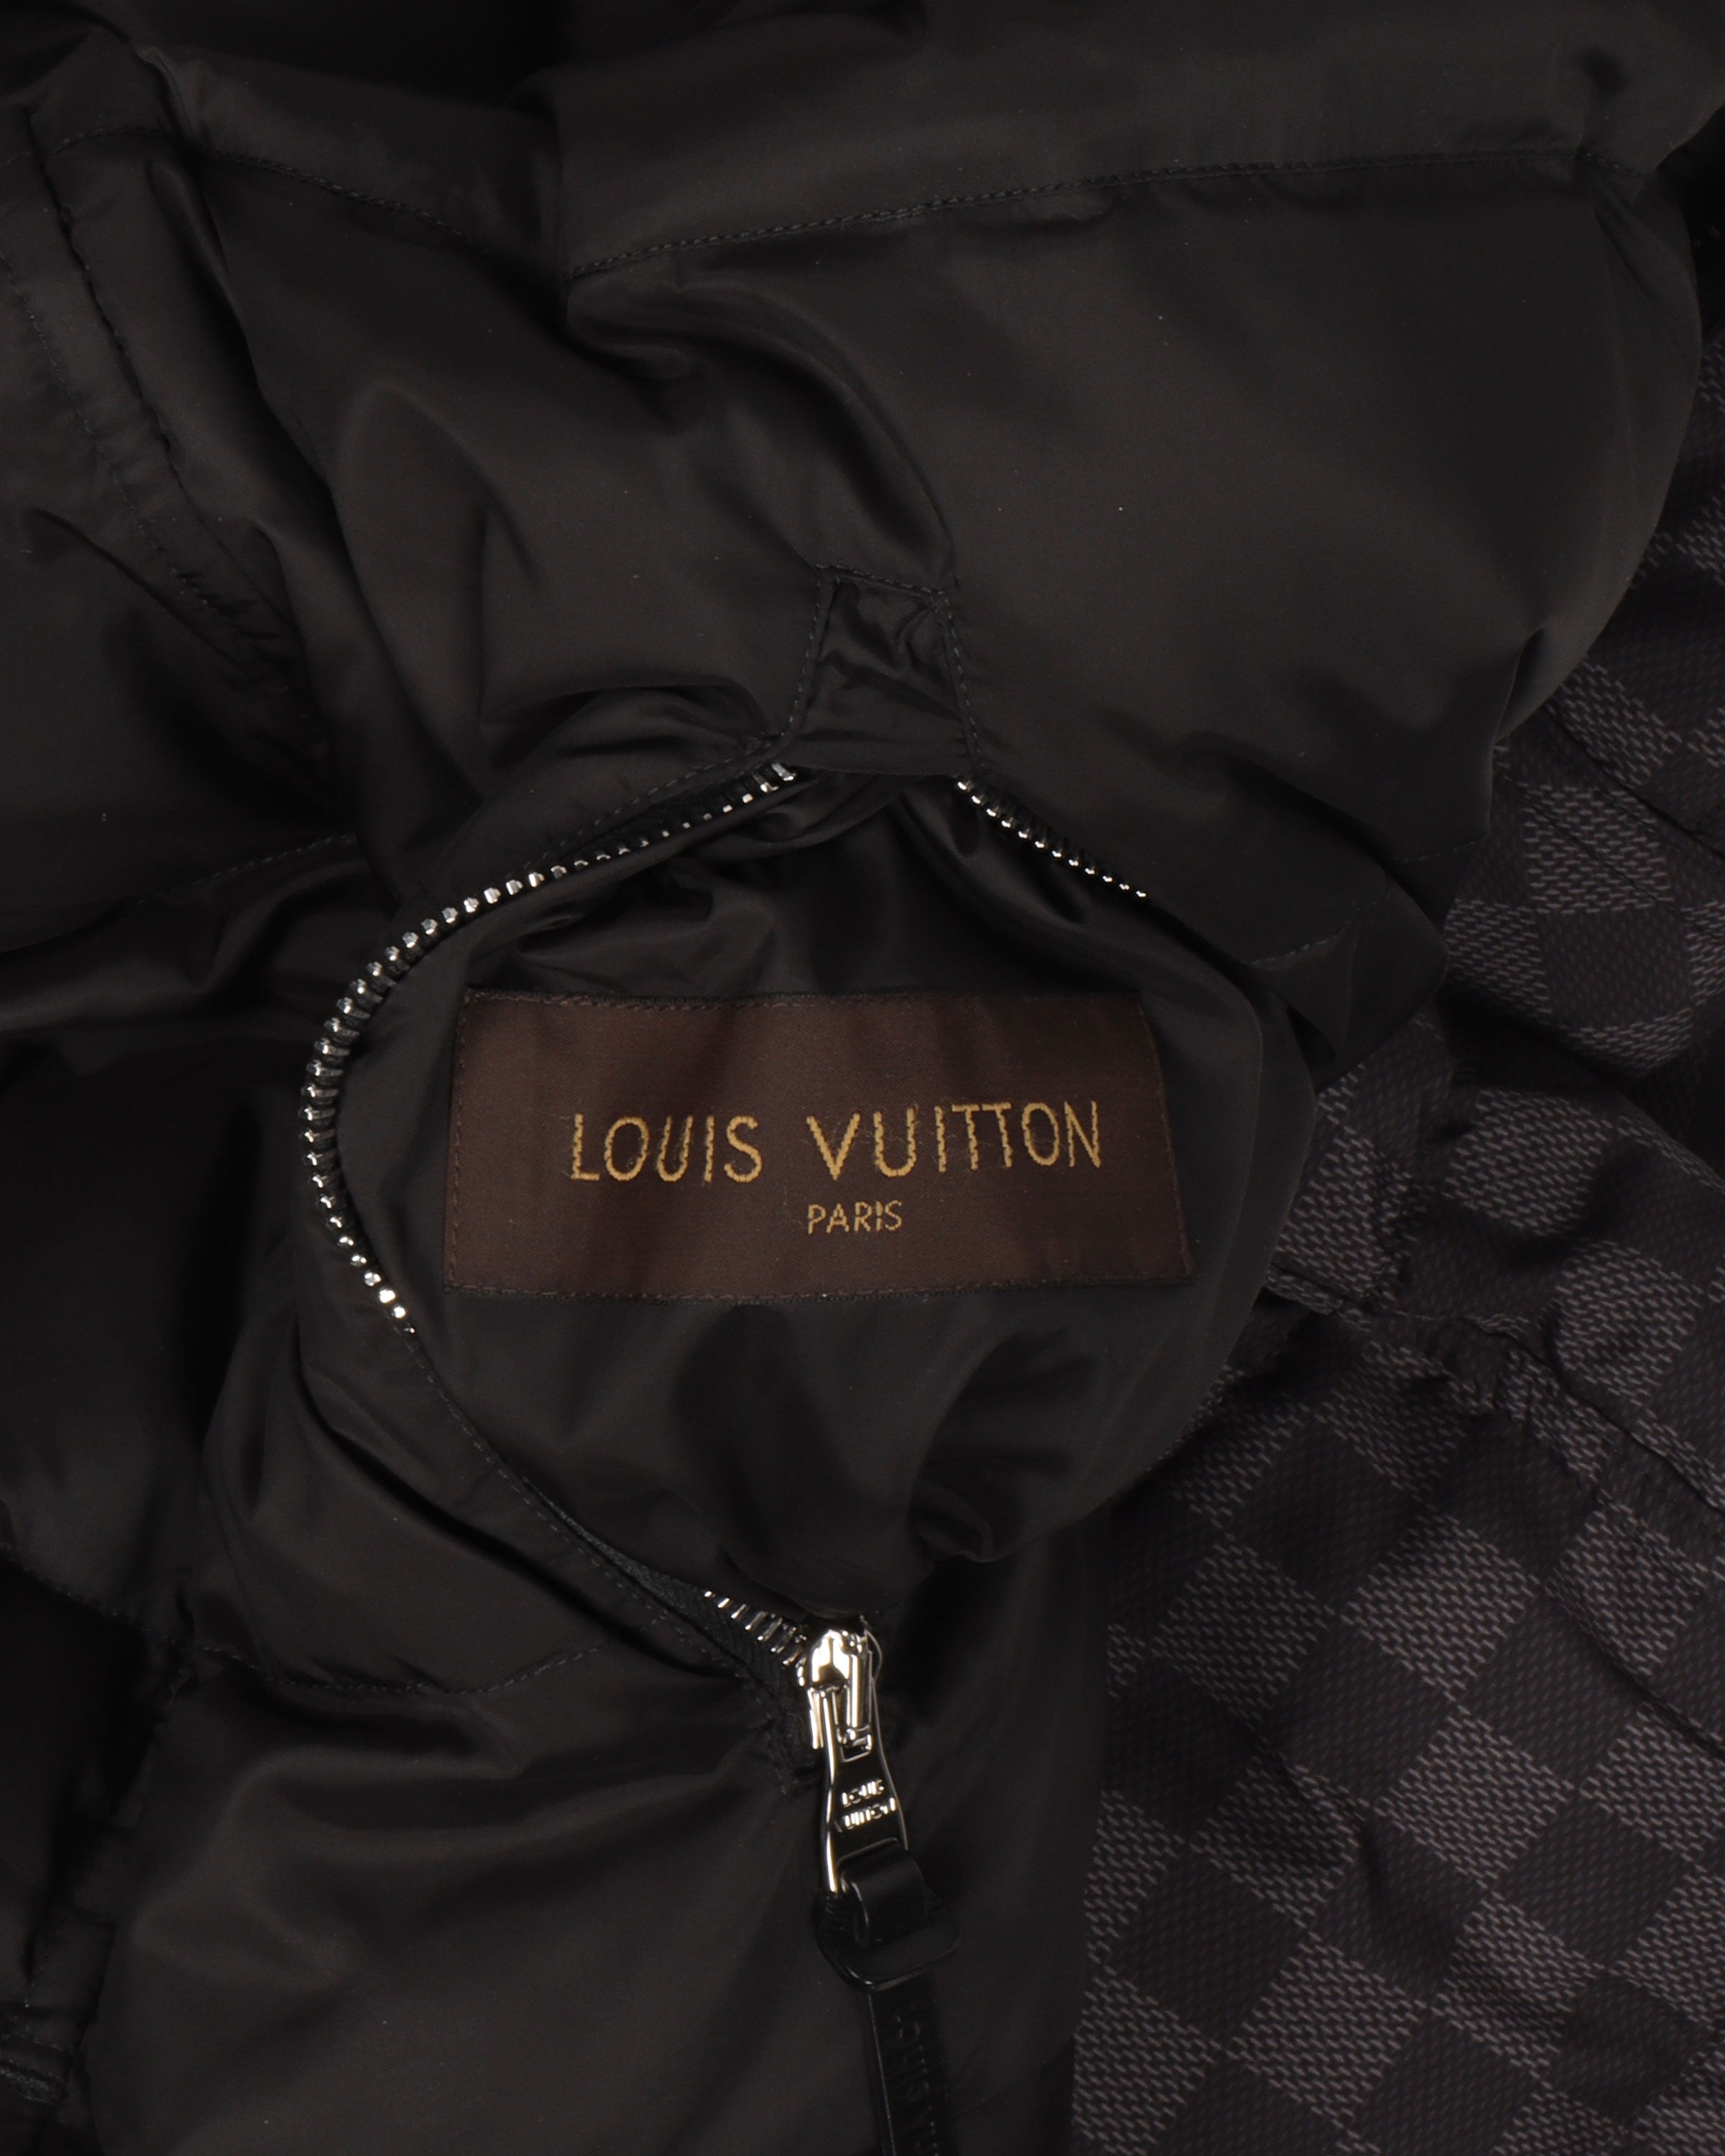 LOUIS VUITTON LV lurex damier black short down puffer jacket coat